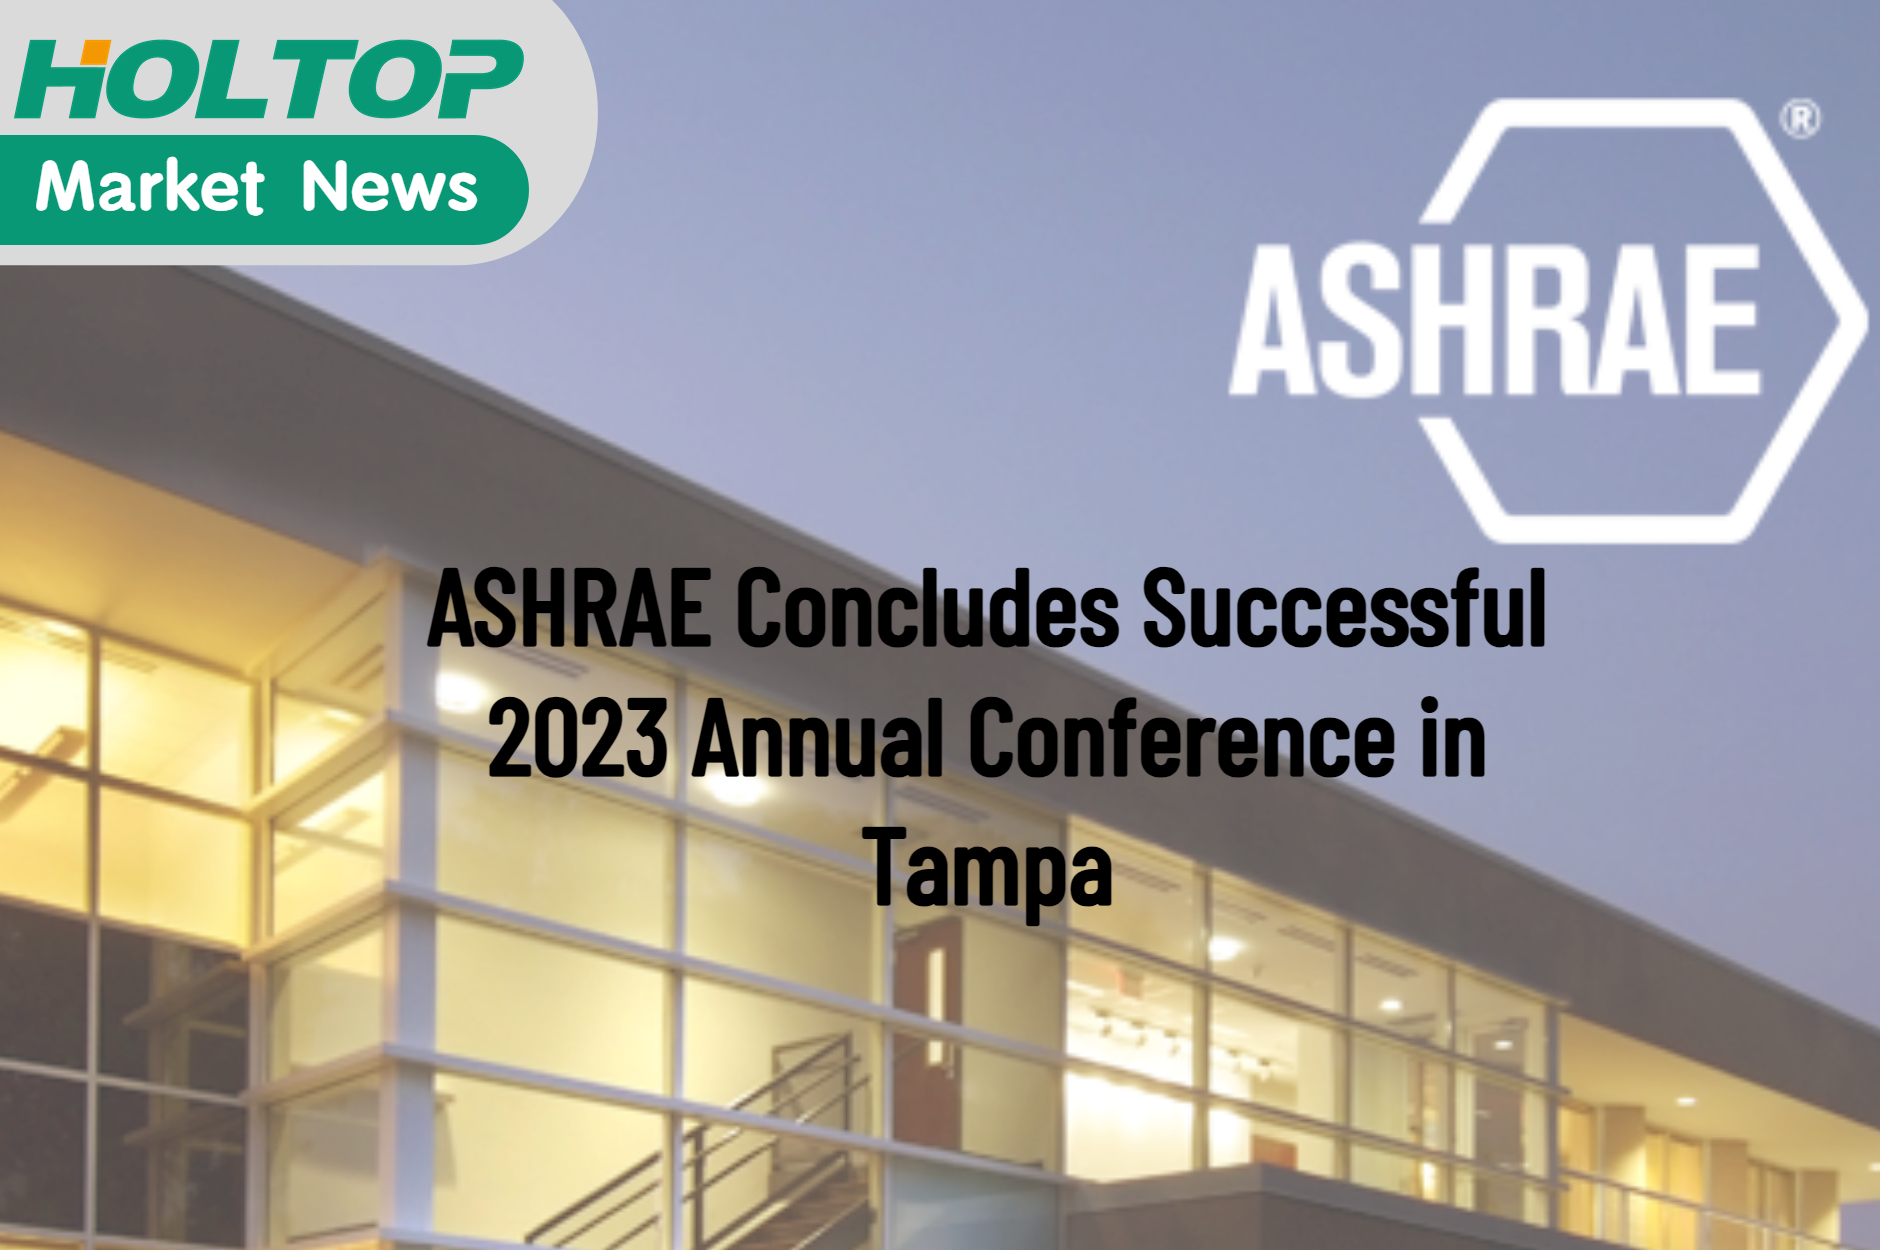 ASHRAE تختتم المؤتمر السنوي الناجح لعام 2023 في تامبا